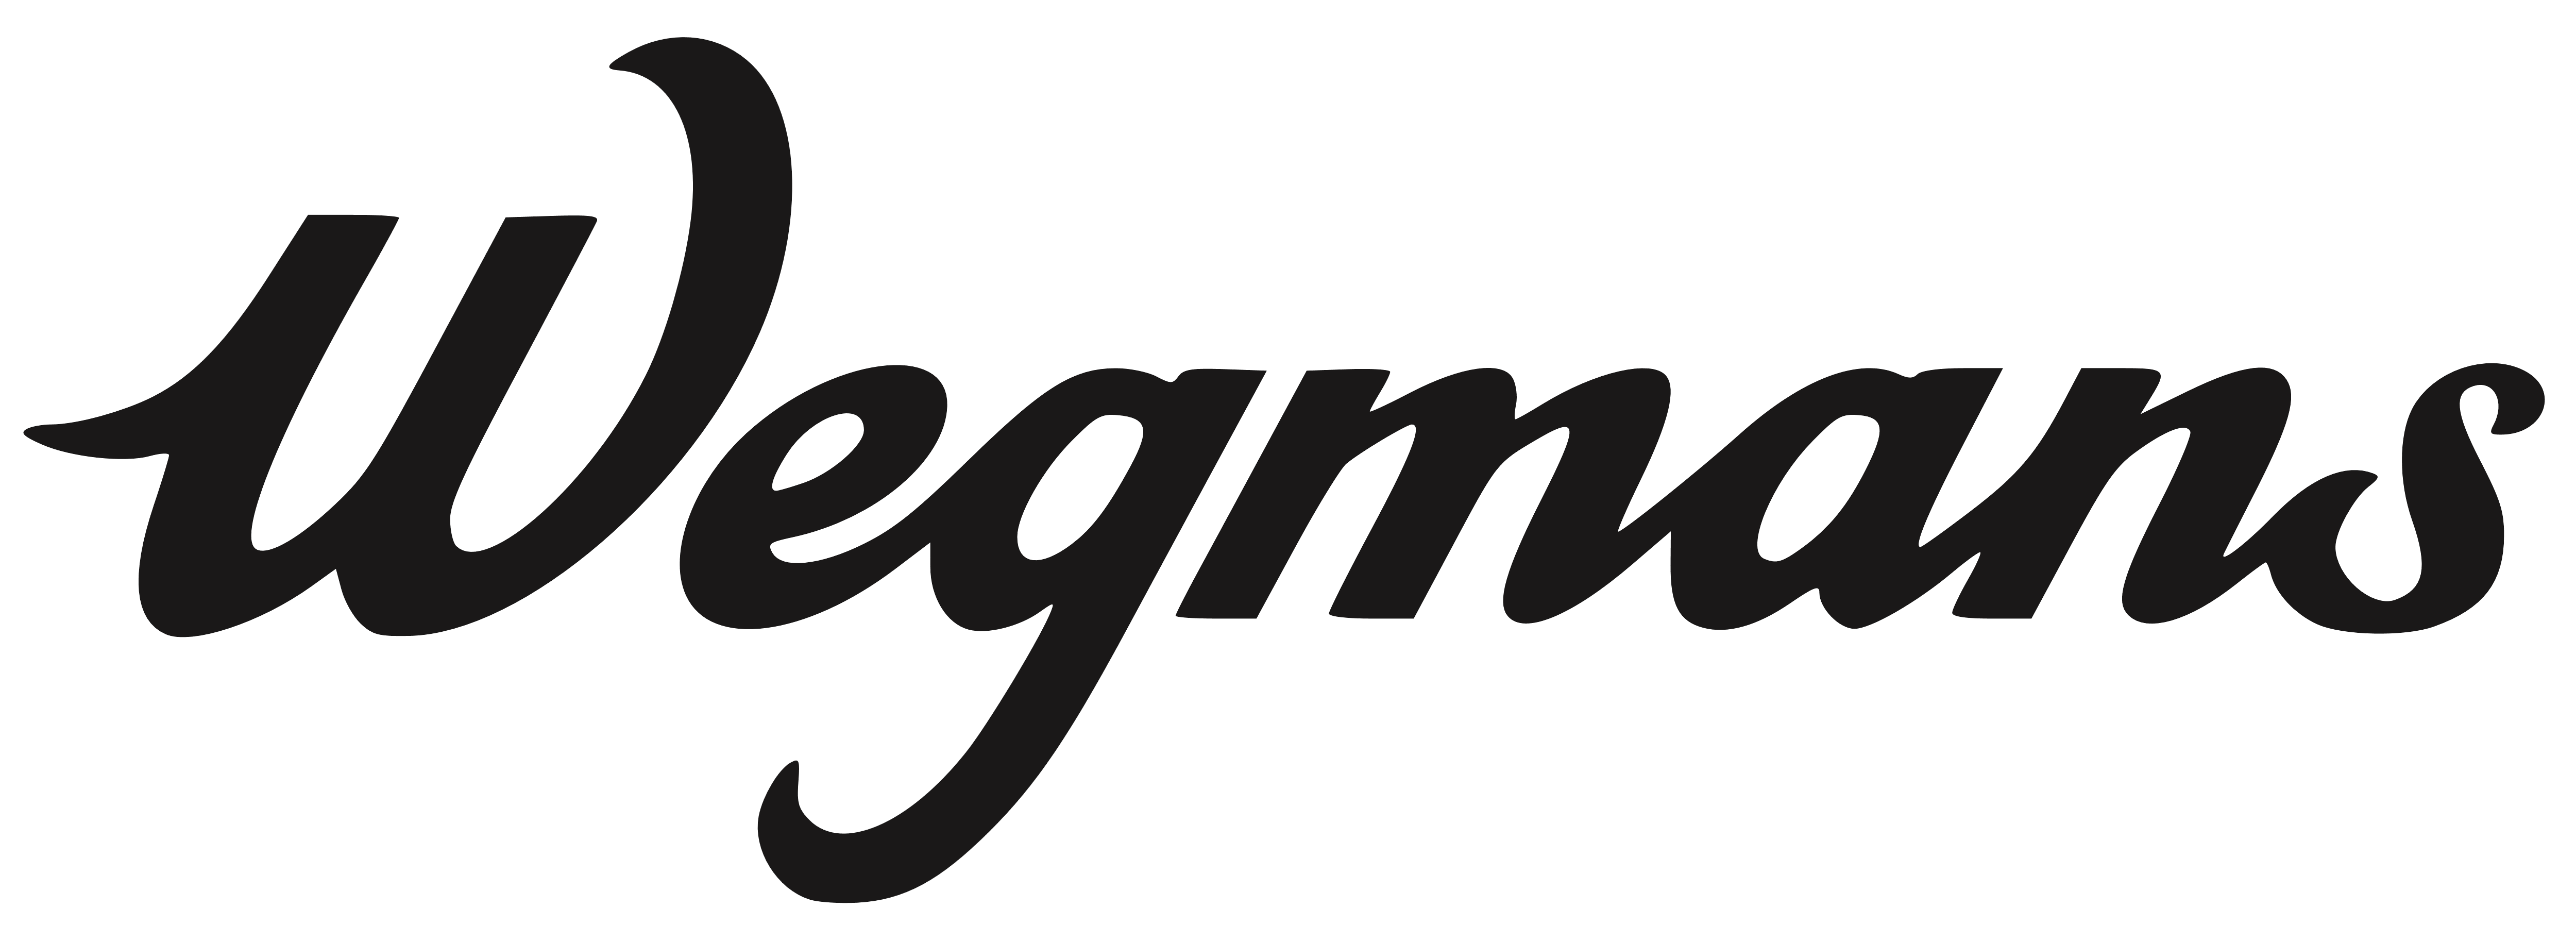 Wegmans_logo_light_black